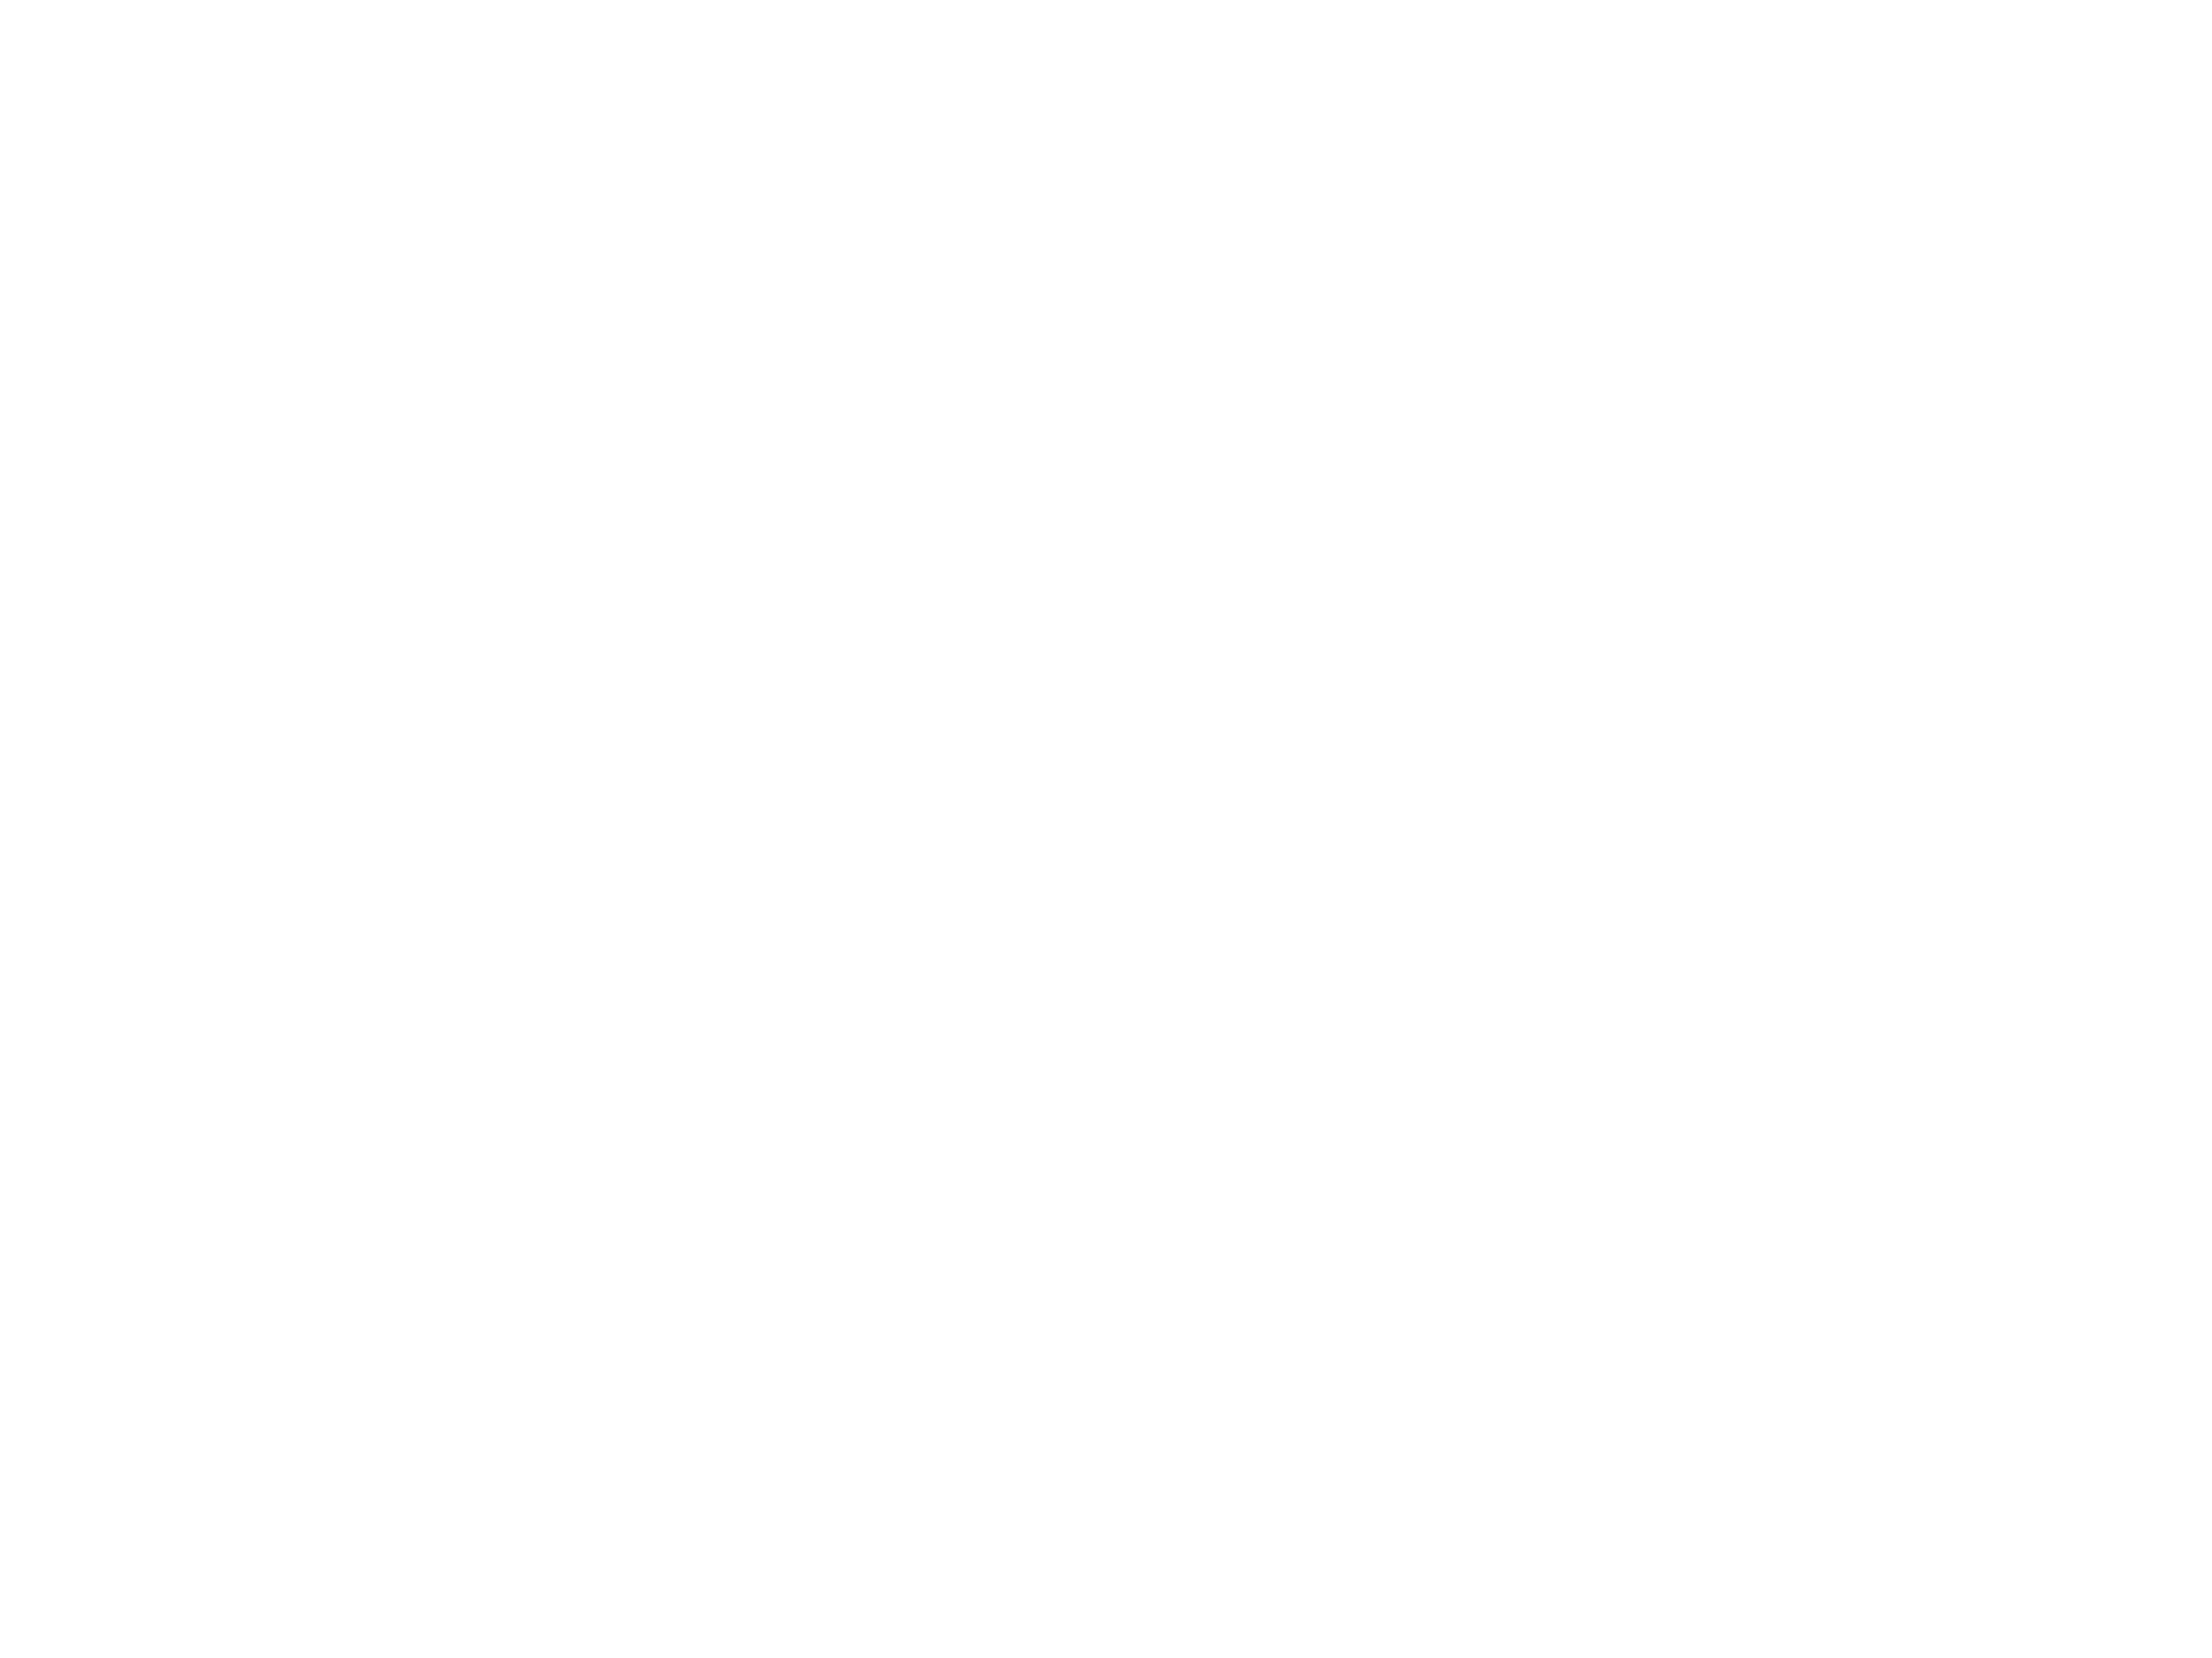 Robert Hyma